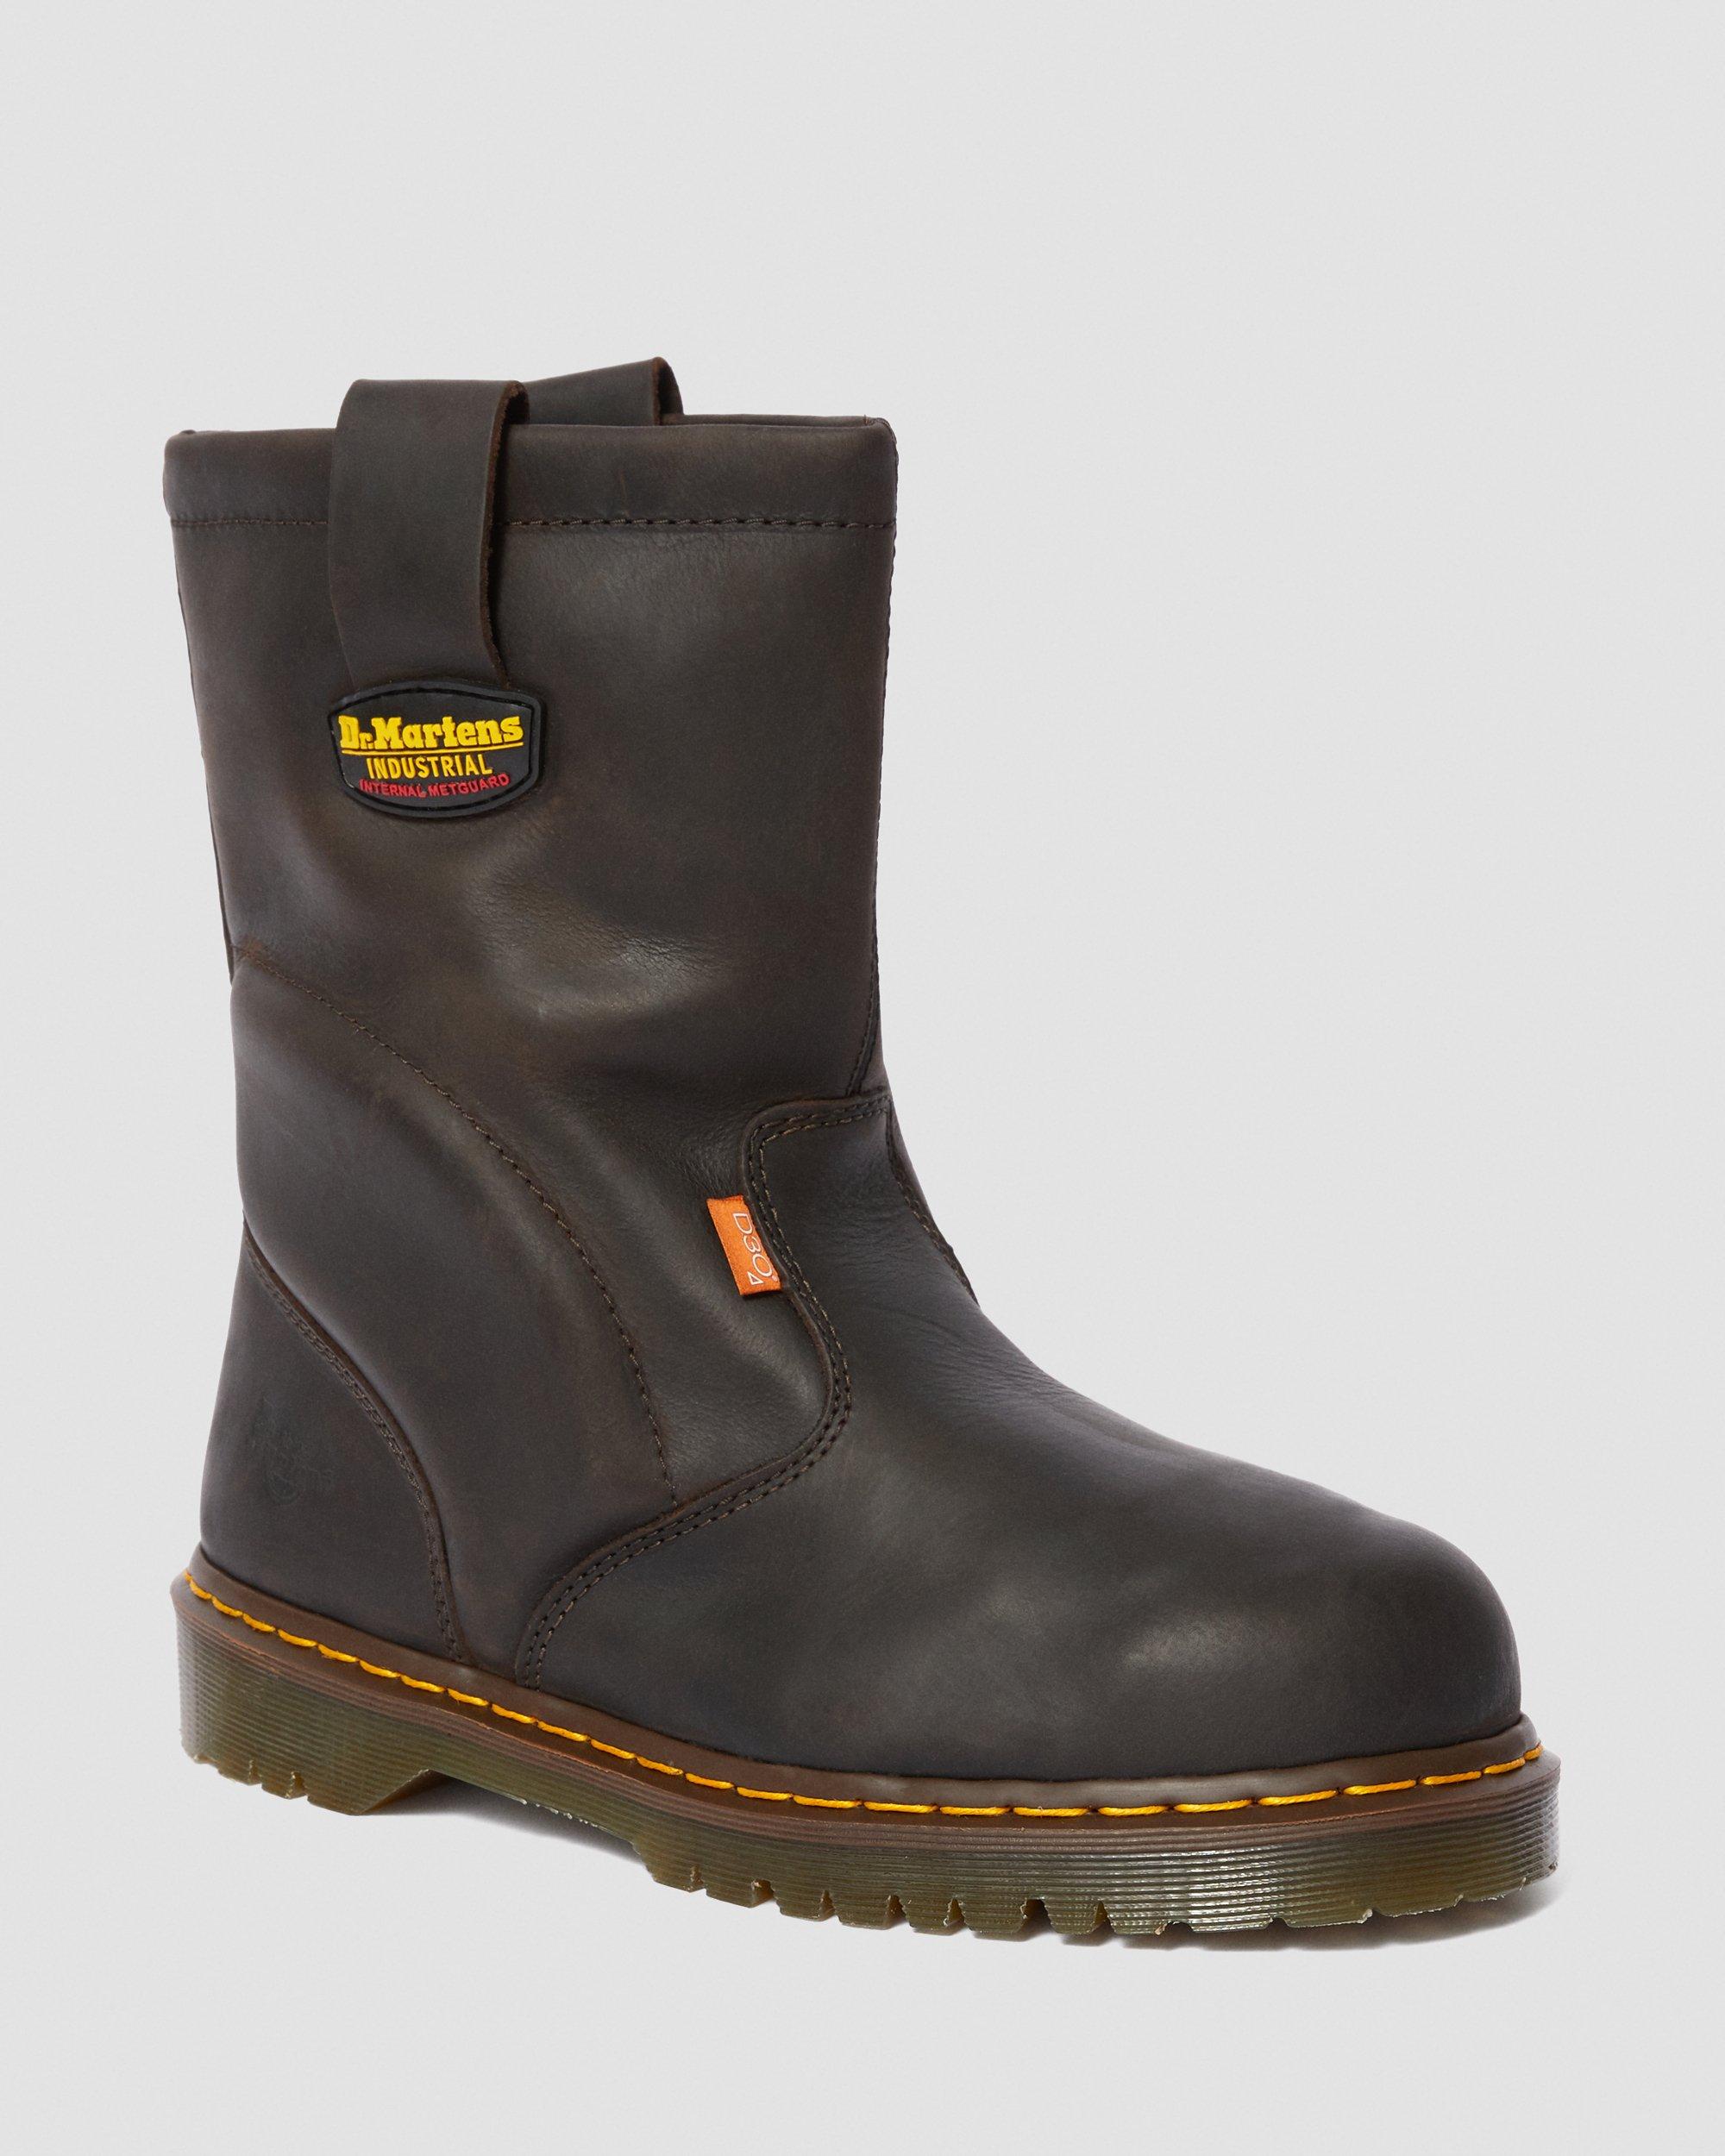 2295 Extra Wide Met Guard Leather Slip On Work Boots in Dark Brown